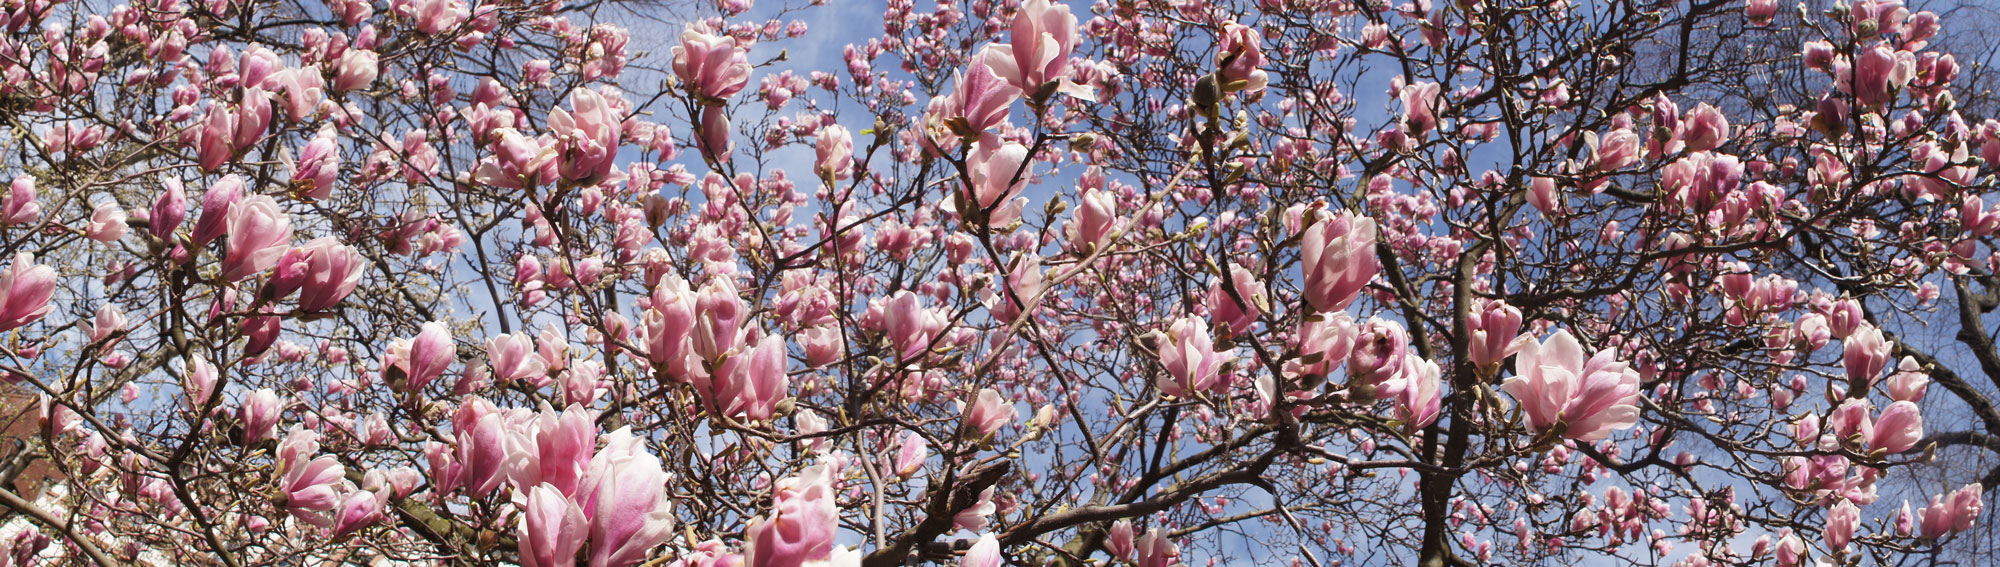 magnolien_baum_blueten